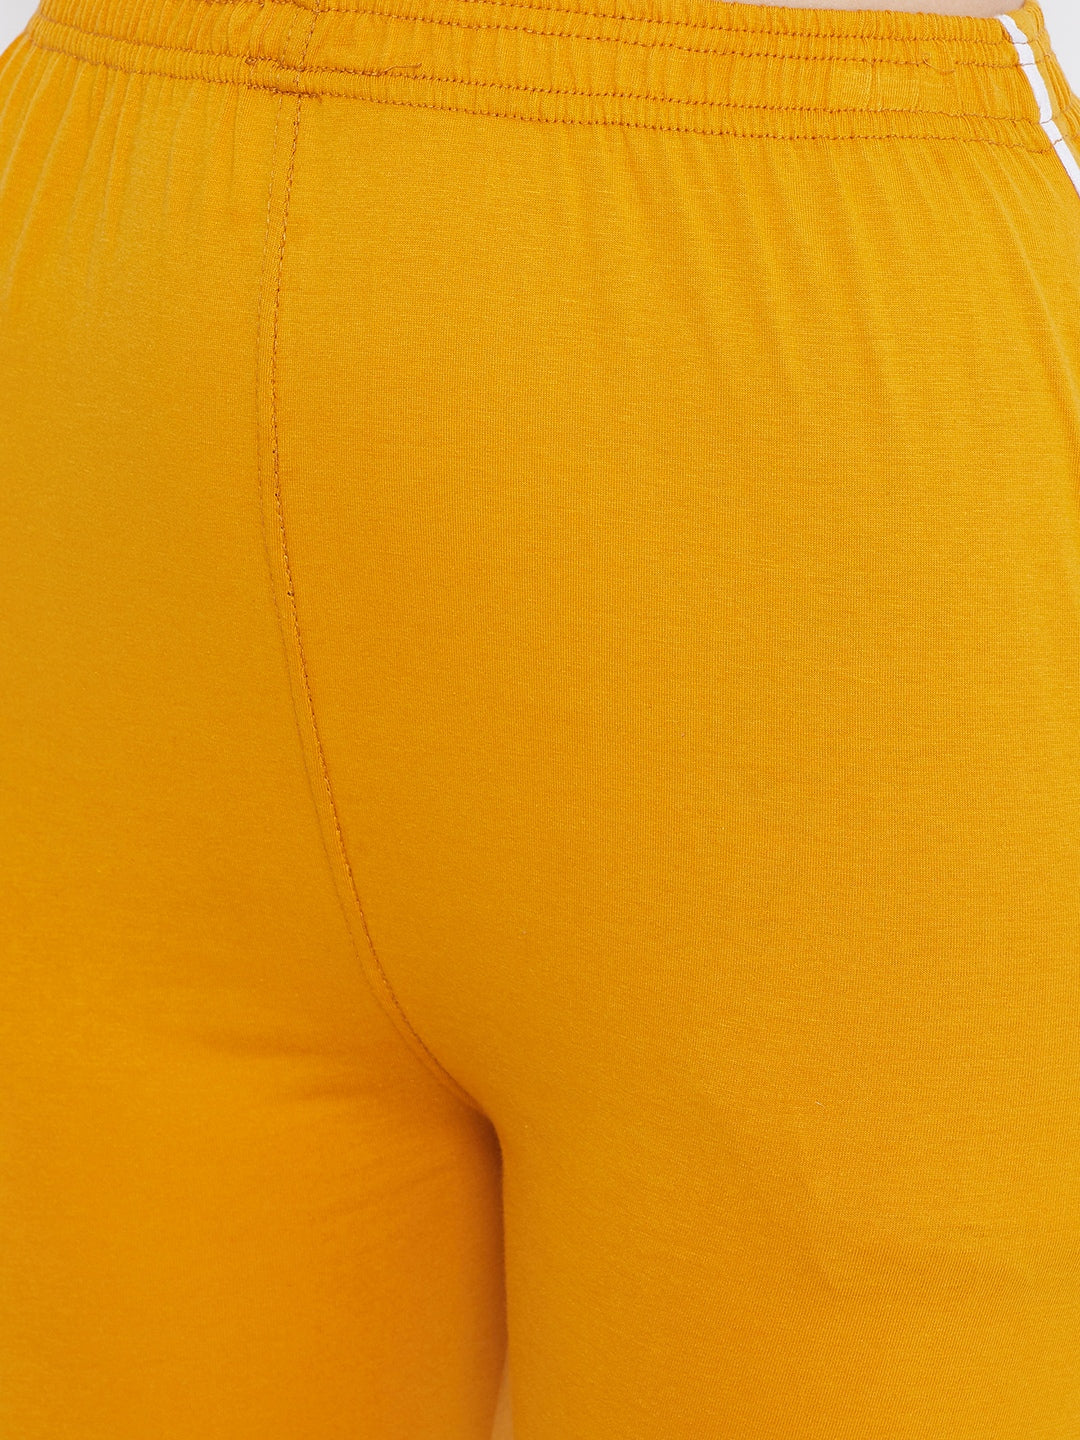 Clora Mustard Straight Fit Trackpants